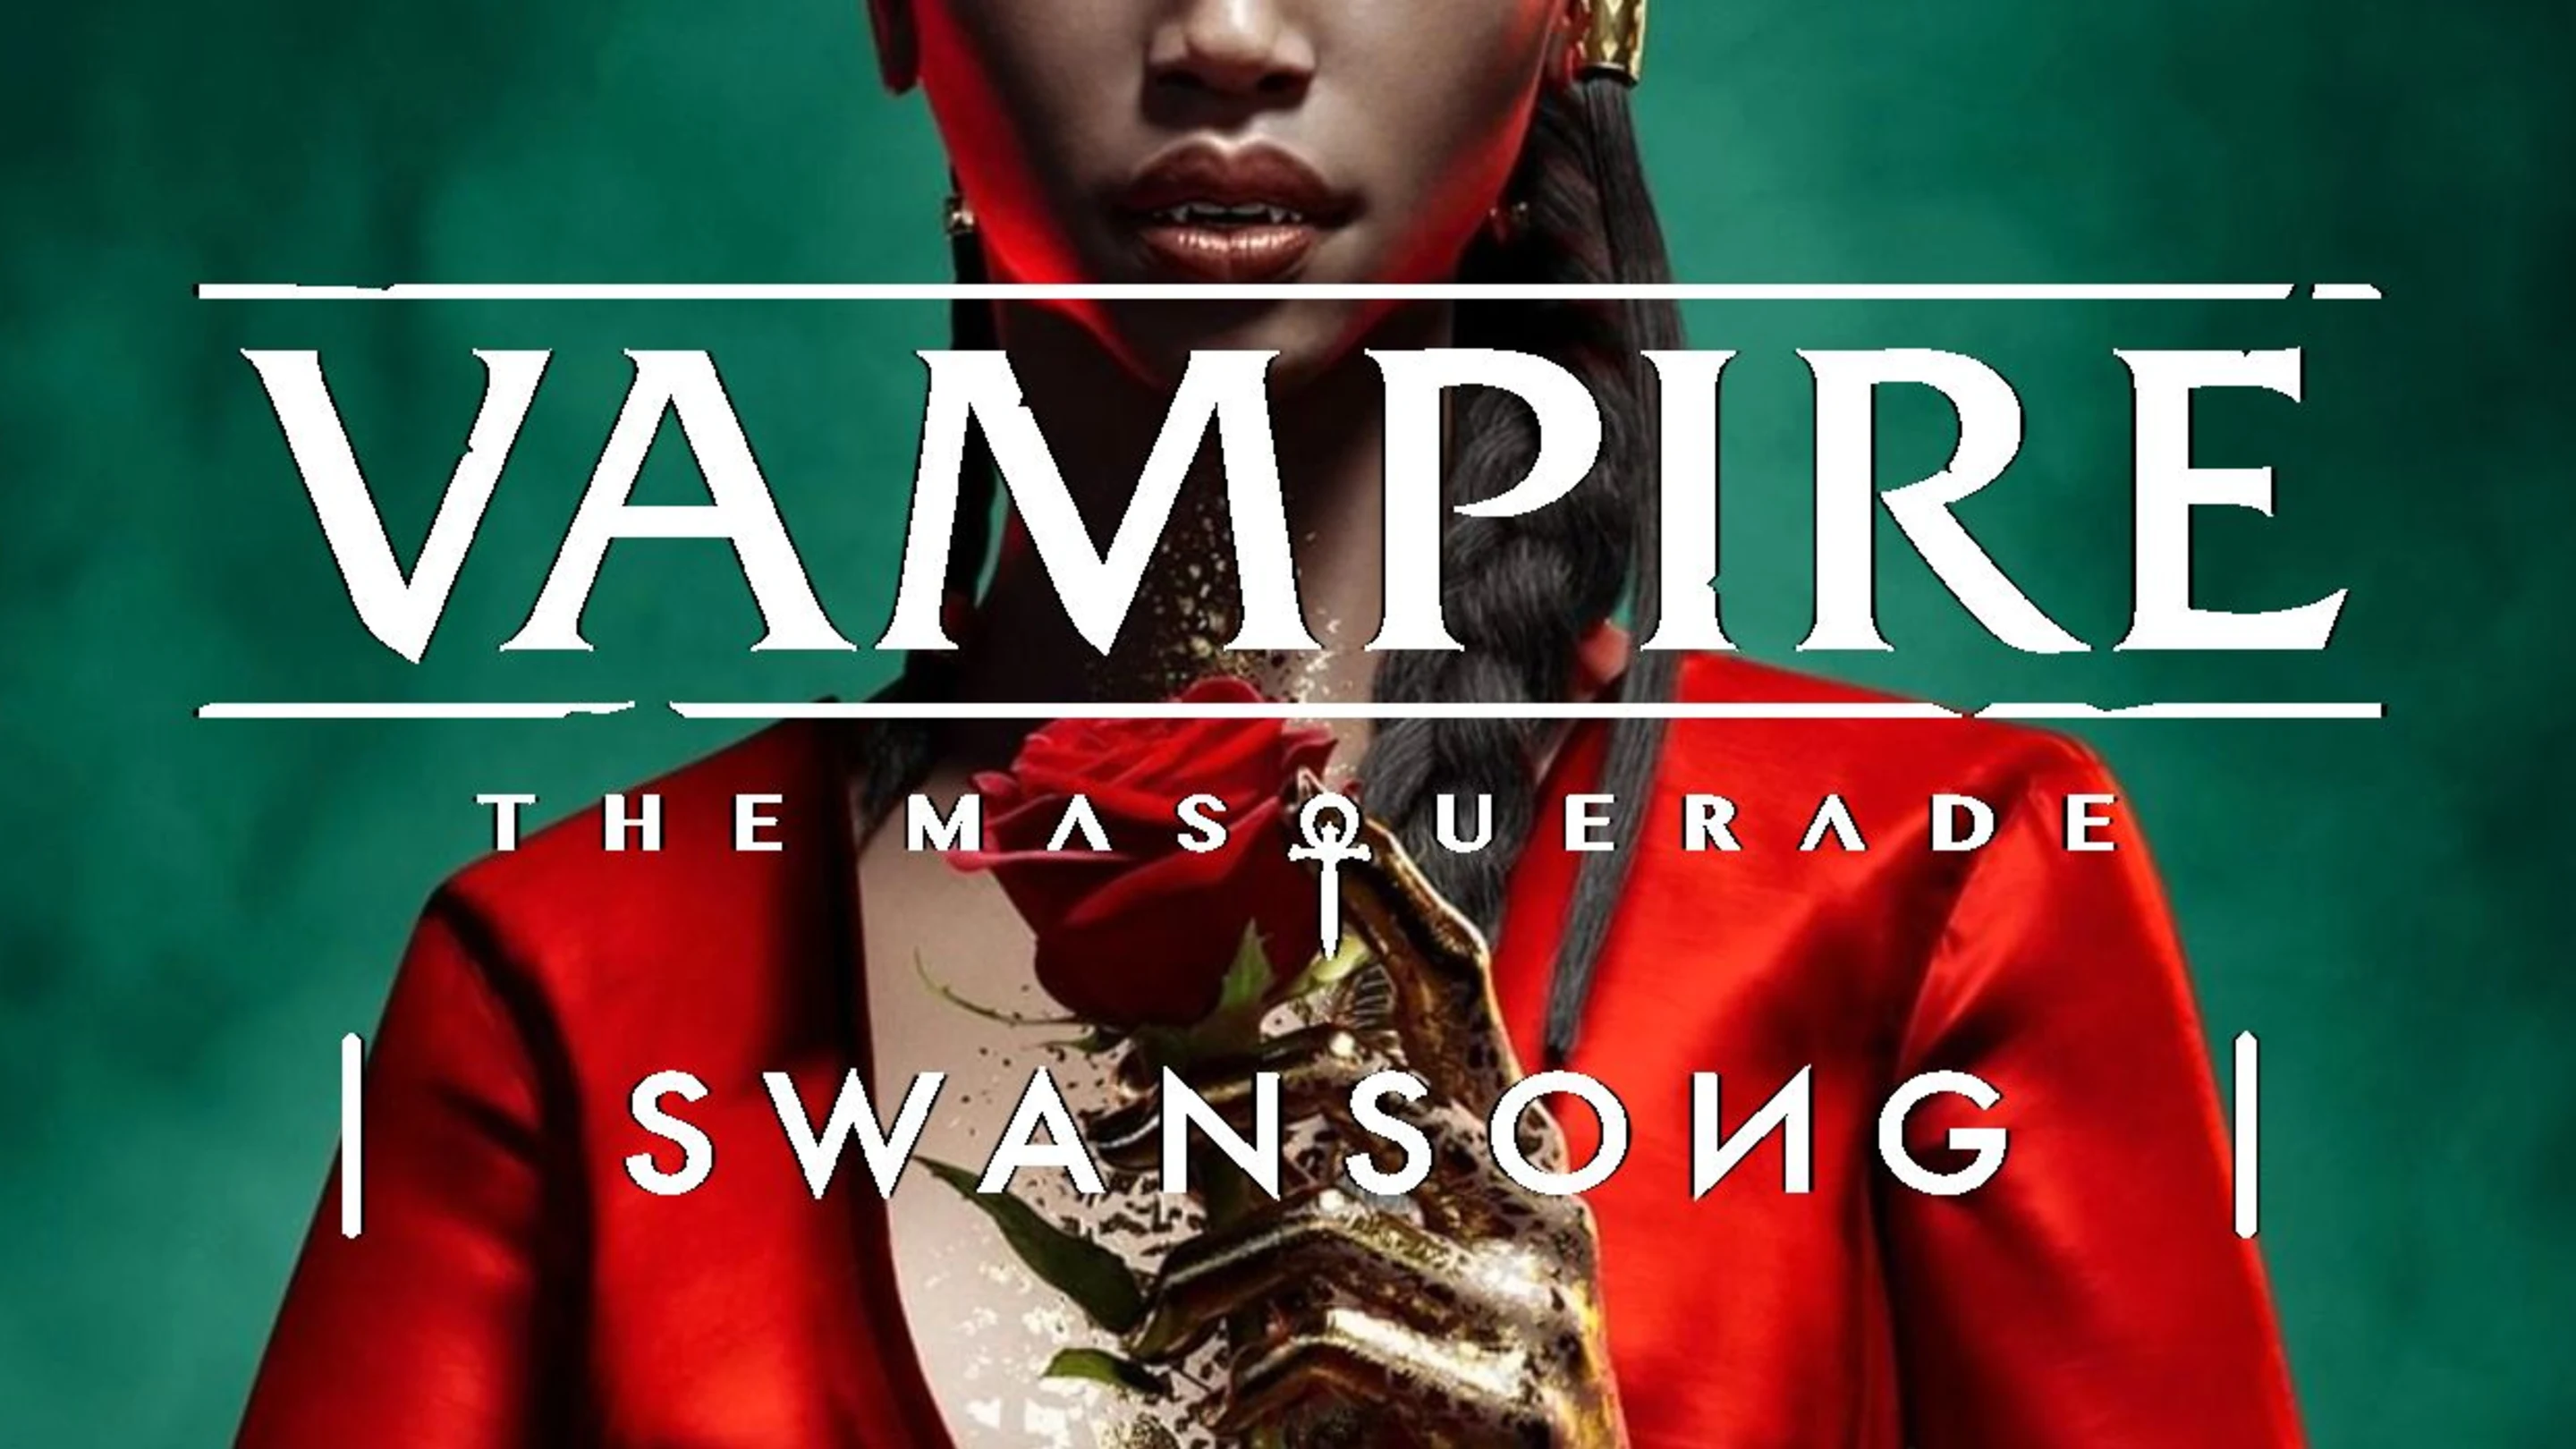 Vampire The Masquerade Swansong Free Download